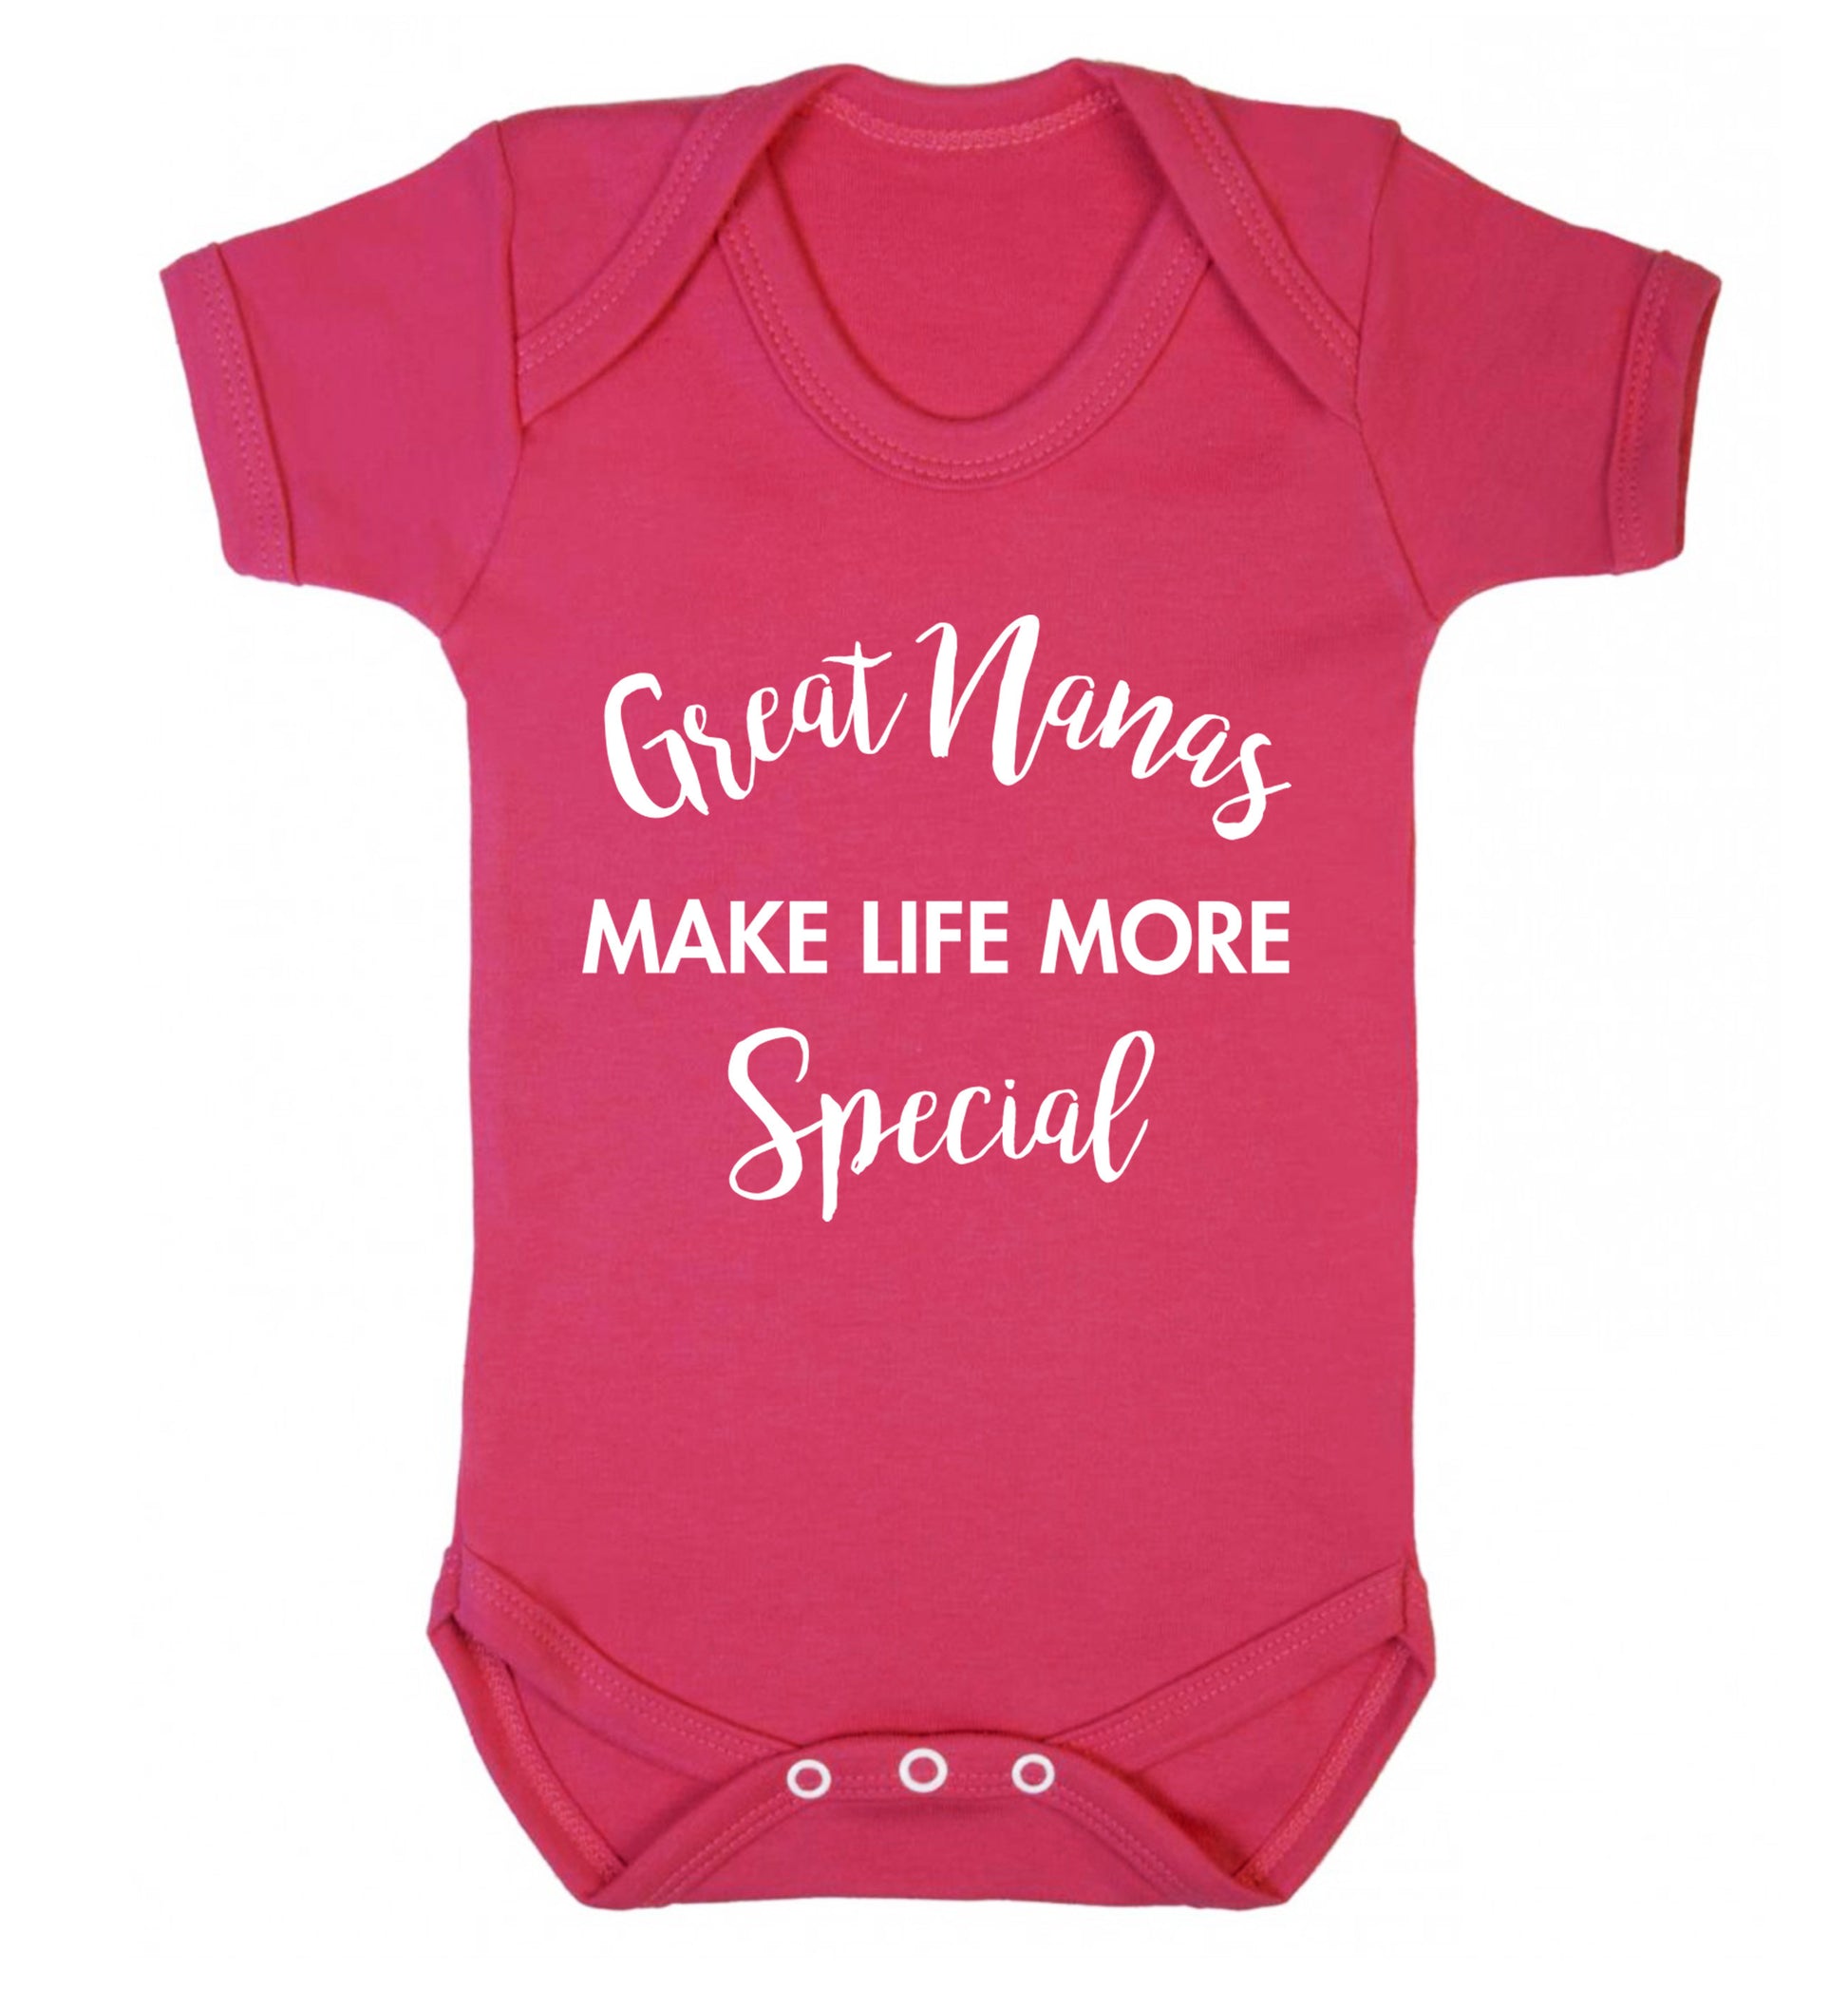 Great nanas make life more special Baby Vest dark pink 18-24 months